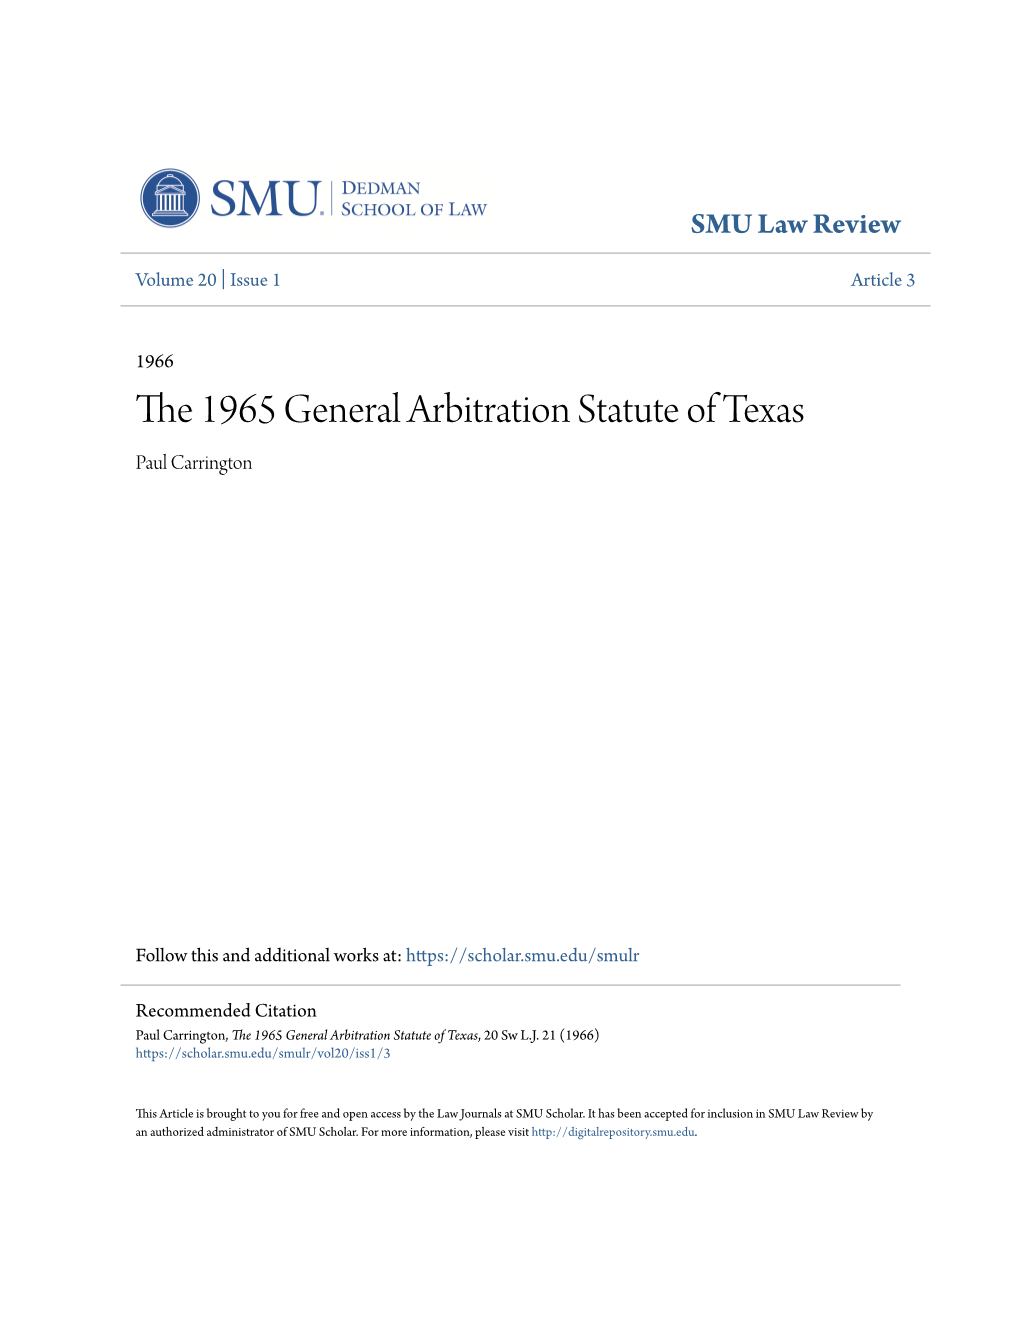 The 1965 General Arbitration Statute of Texas Paul Carrington